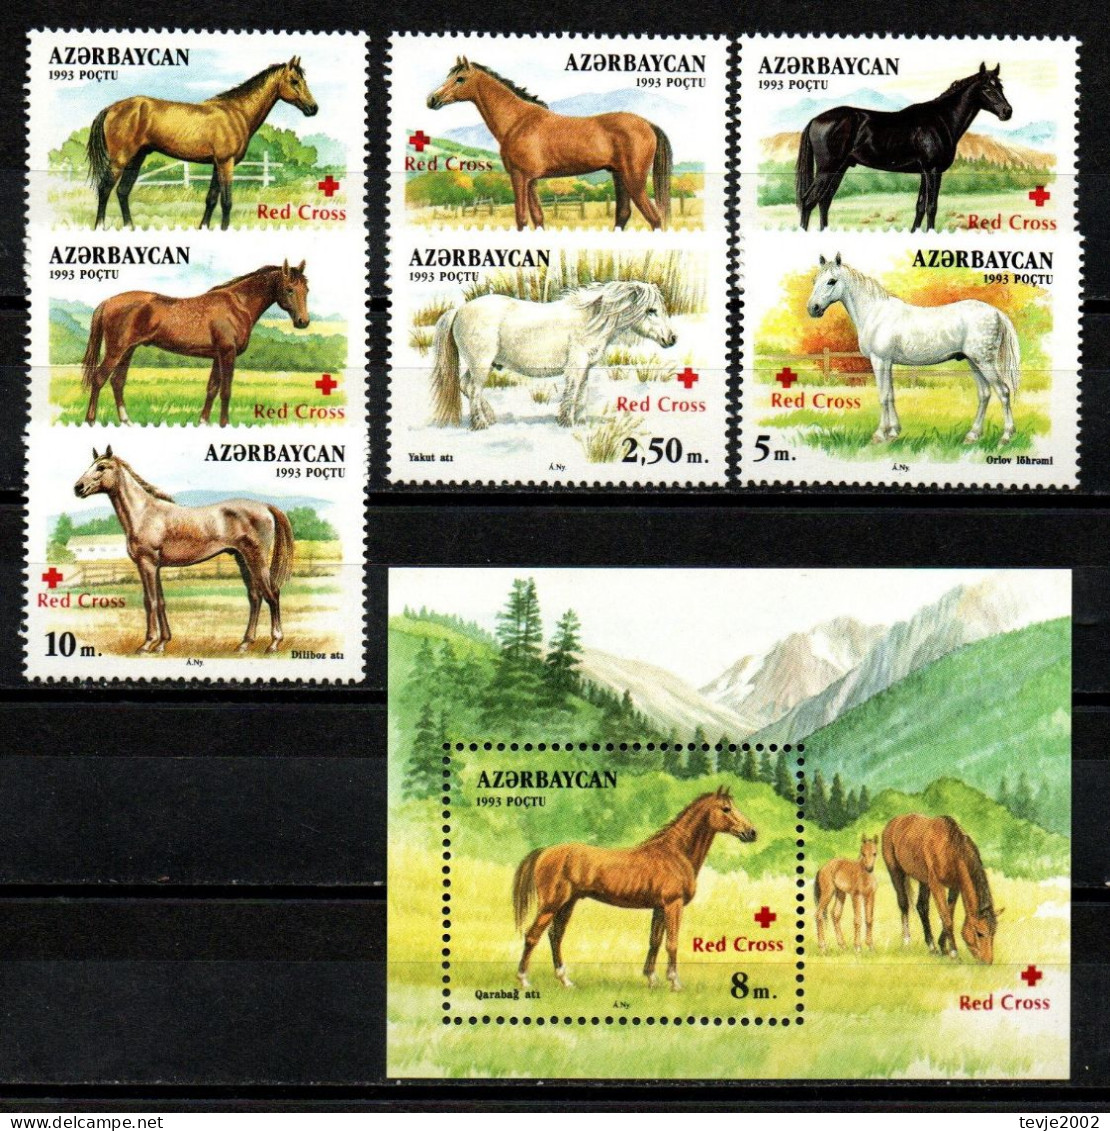 Aserbaidschan 1997 - Mi.Nr. 353 - 359 + Block 27 - Postfrisch MNH - Tiere Animals Pferde Horses Rotes Kreuz Red Cross - Azerbaïdjan